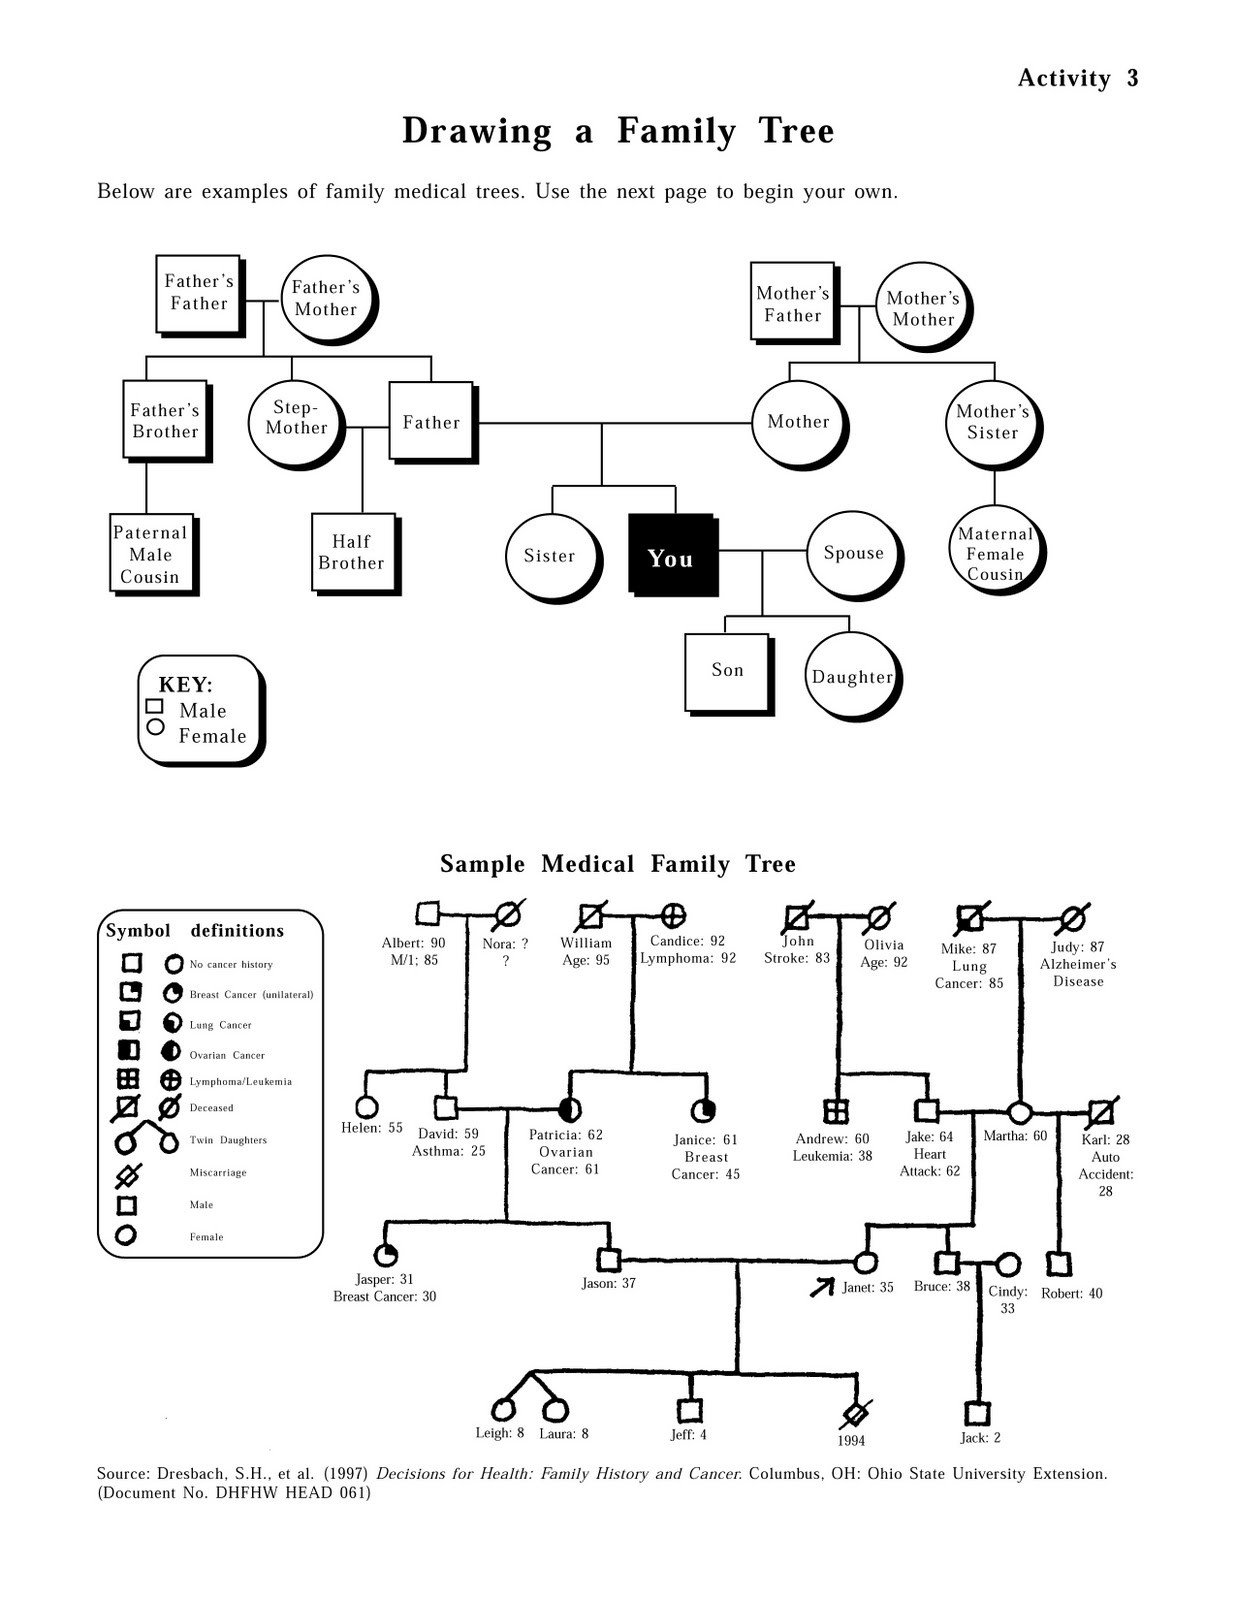 Family Medical Tree A3genealogy Genetics and Genealogy